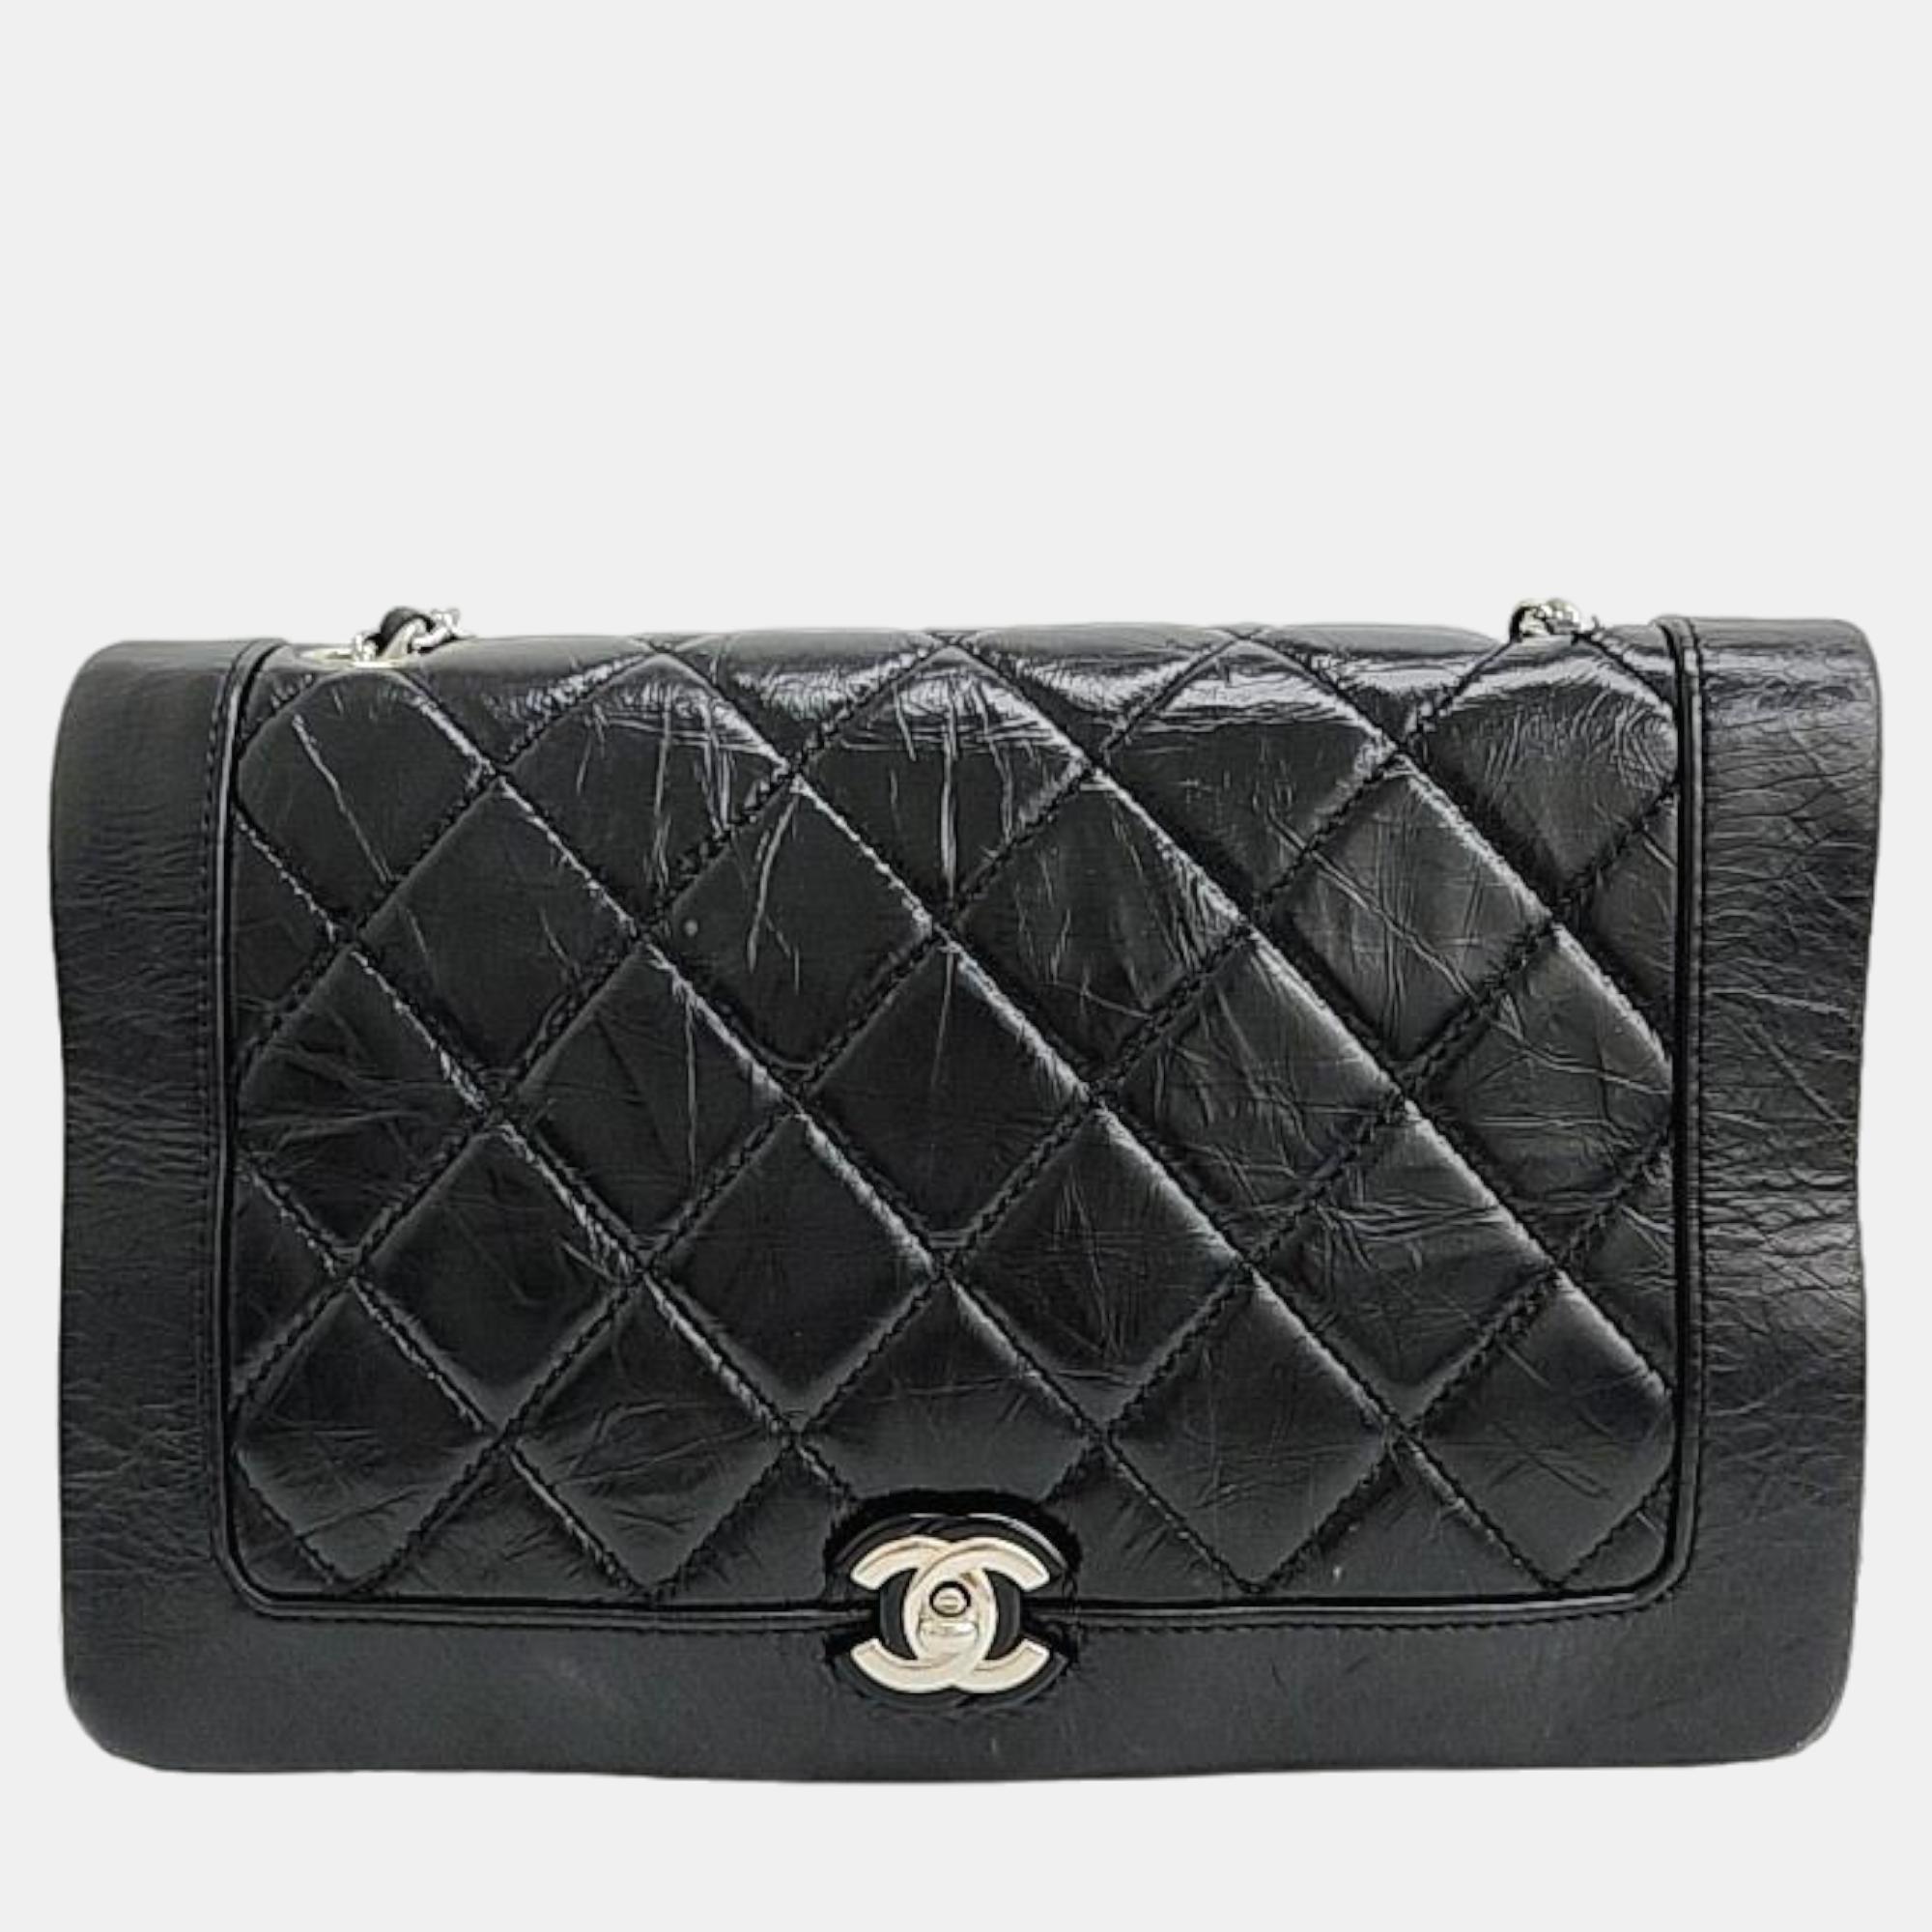 Chanel black leather cc flap bag